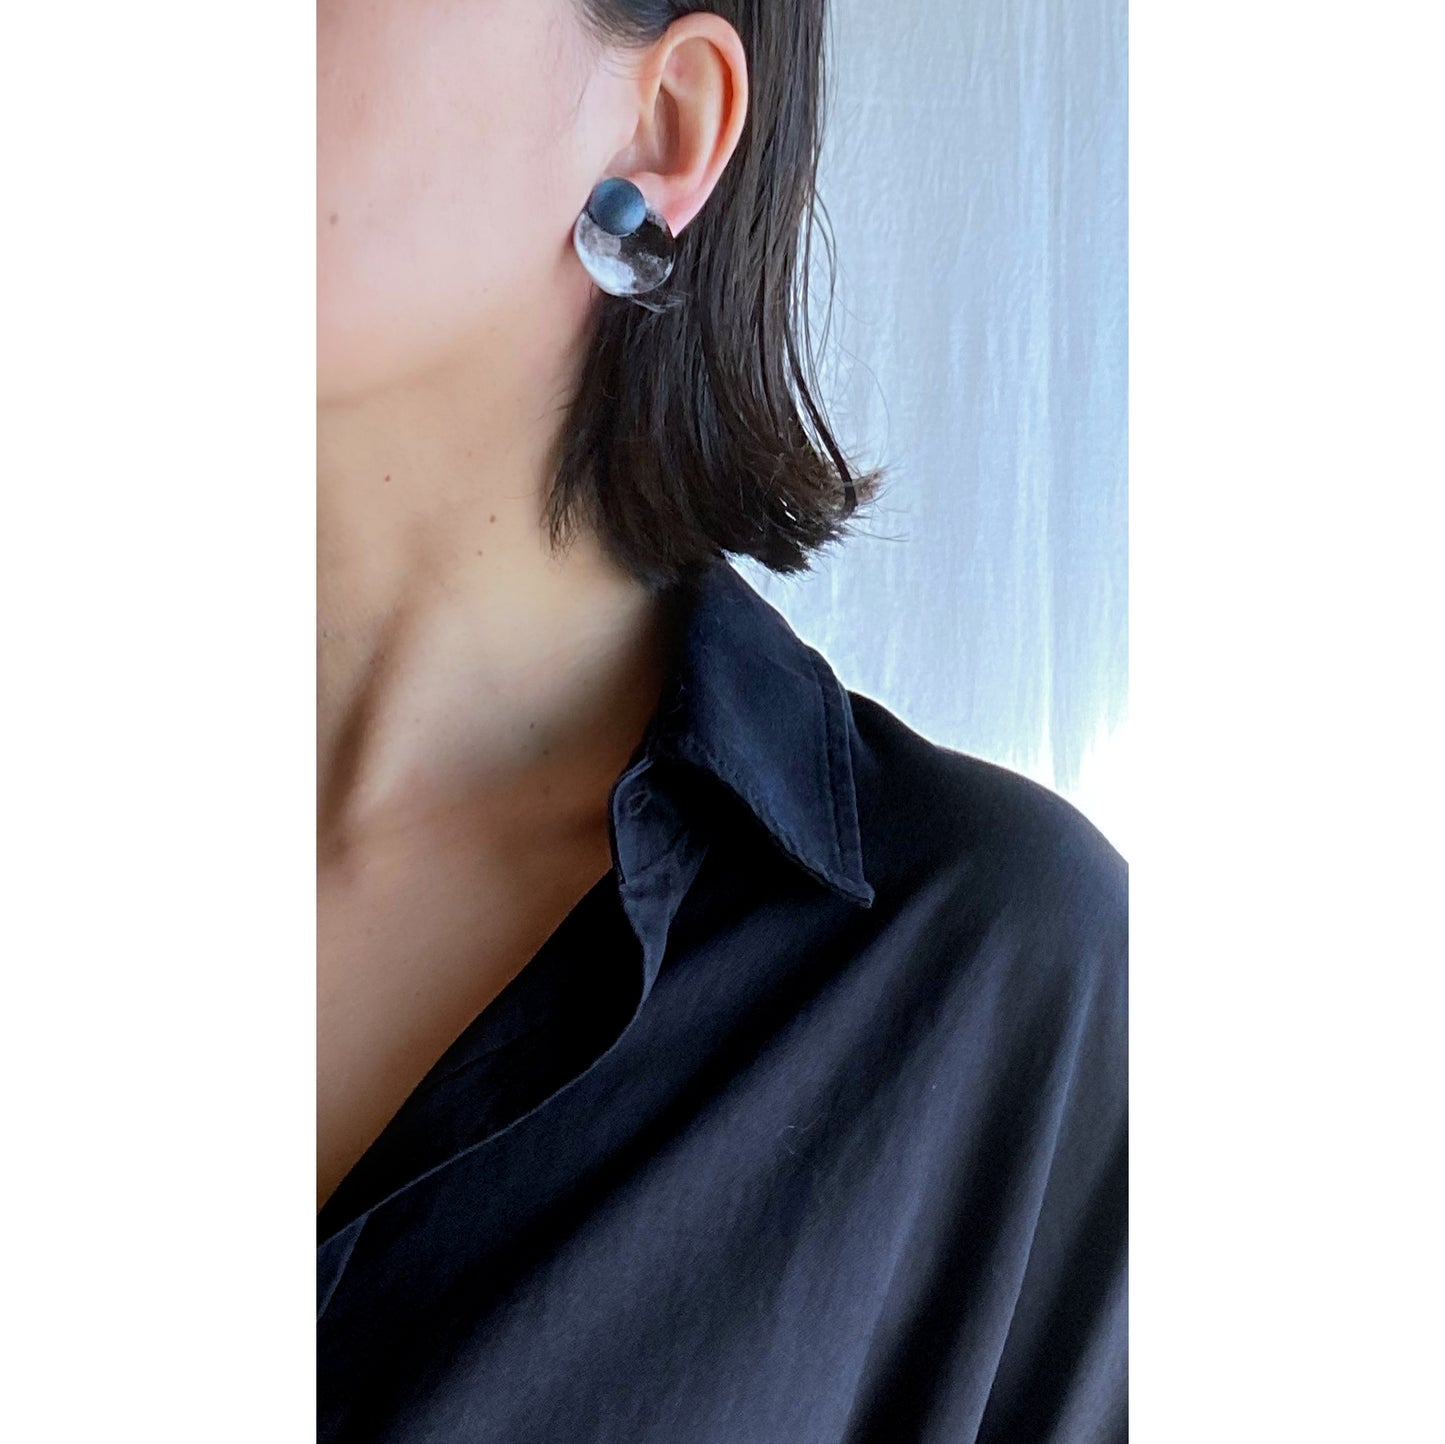 Moon phase cuffs earrings /Michikake/ brown-blue 